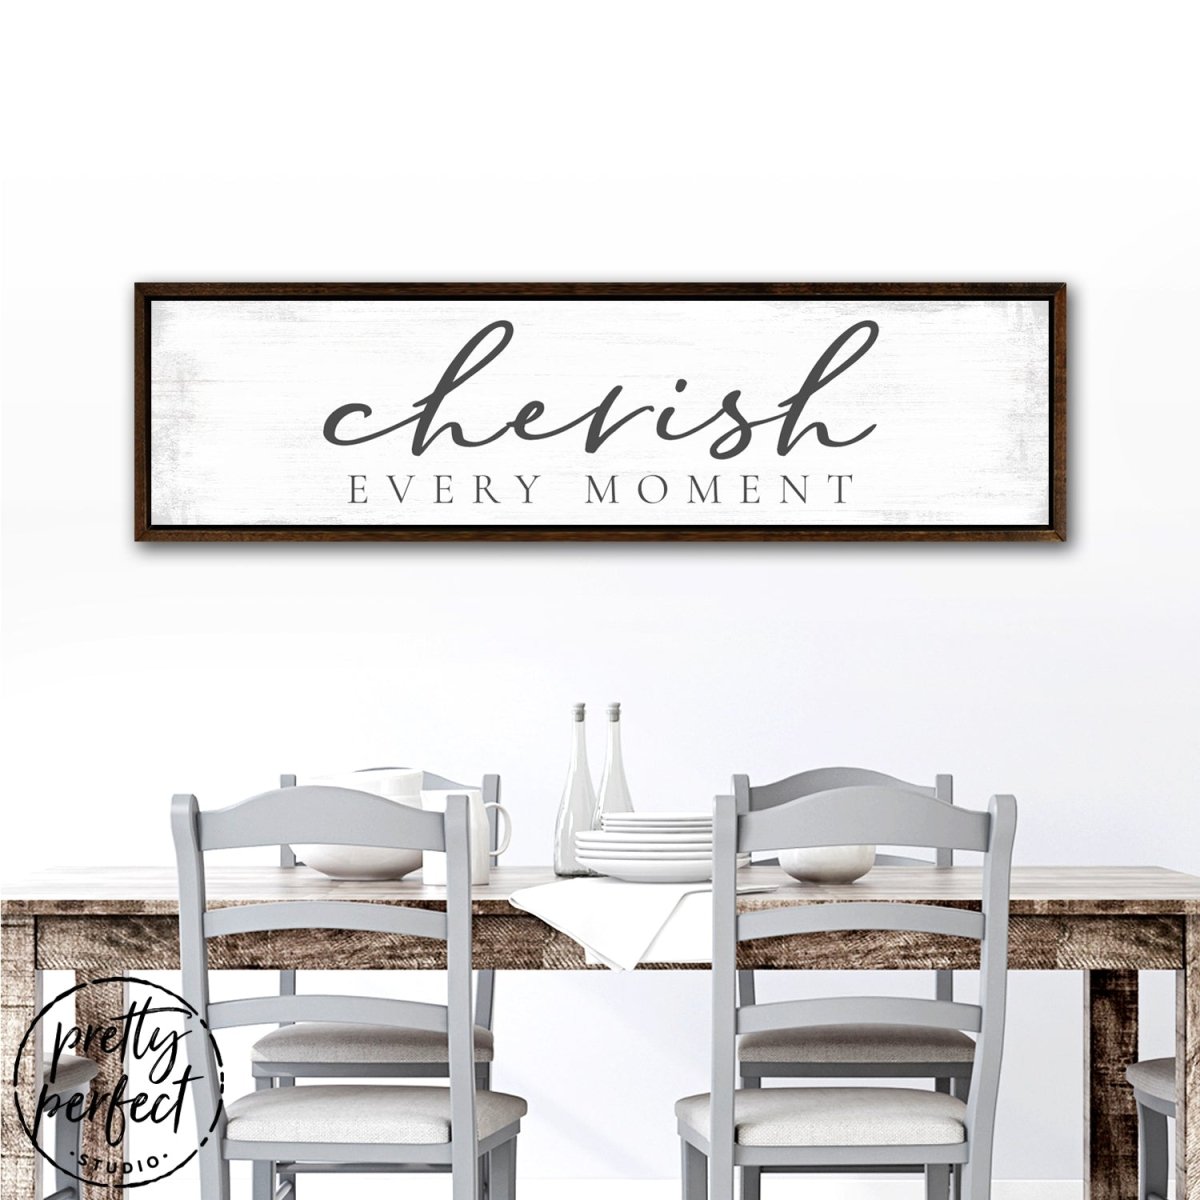 Cherish Every Moment Quote Wall Art Above The Table - Pretty Perfect Studio